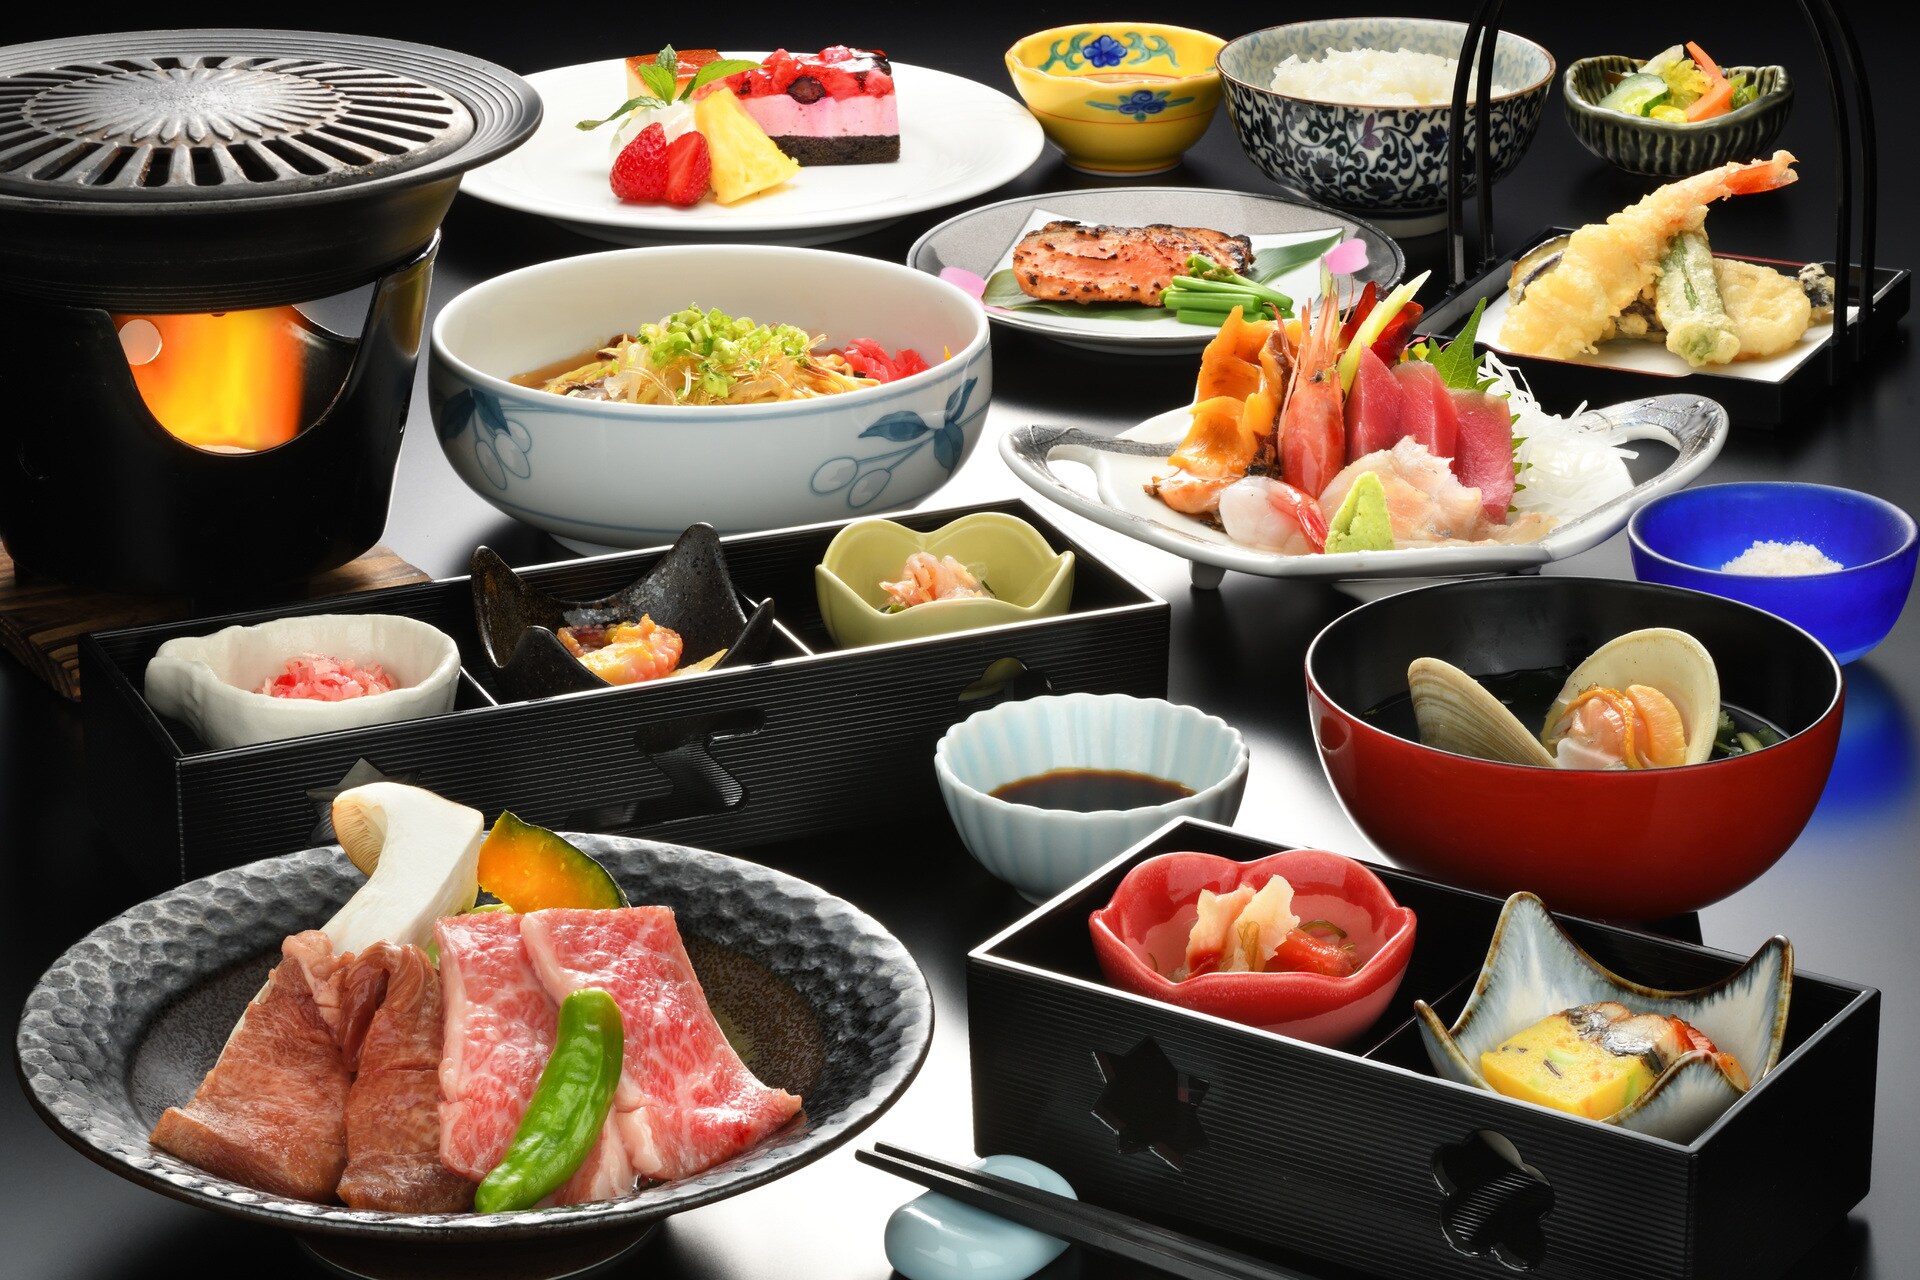 Image of Japanese-style kaiseki meal